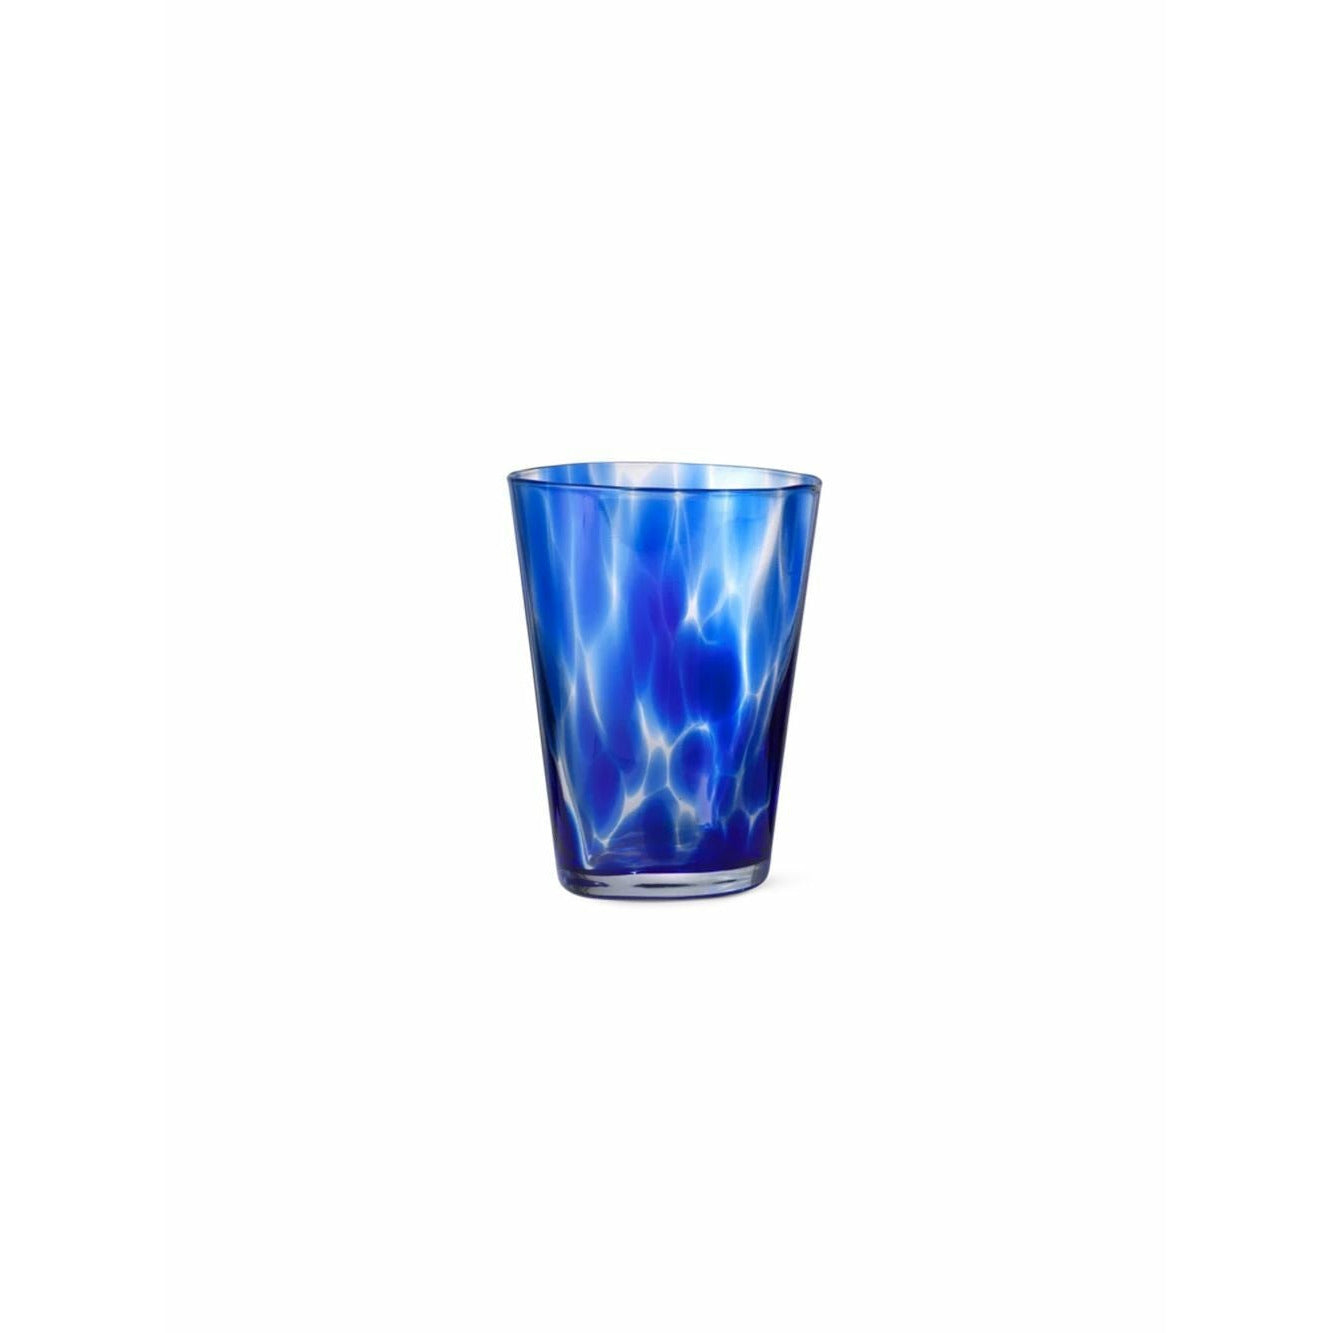 Ferm Living Casca glas, blått